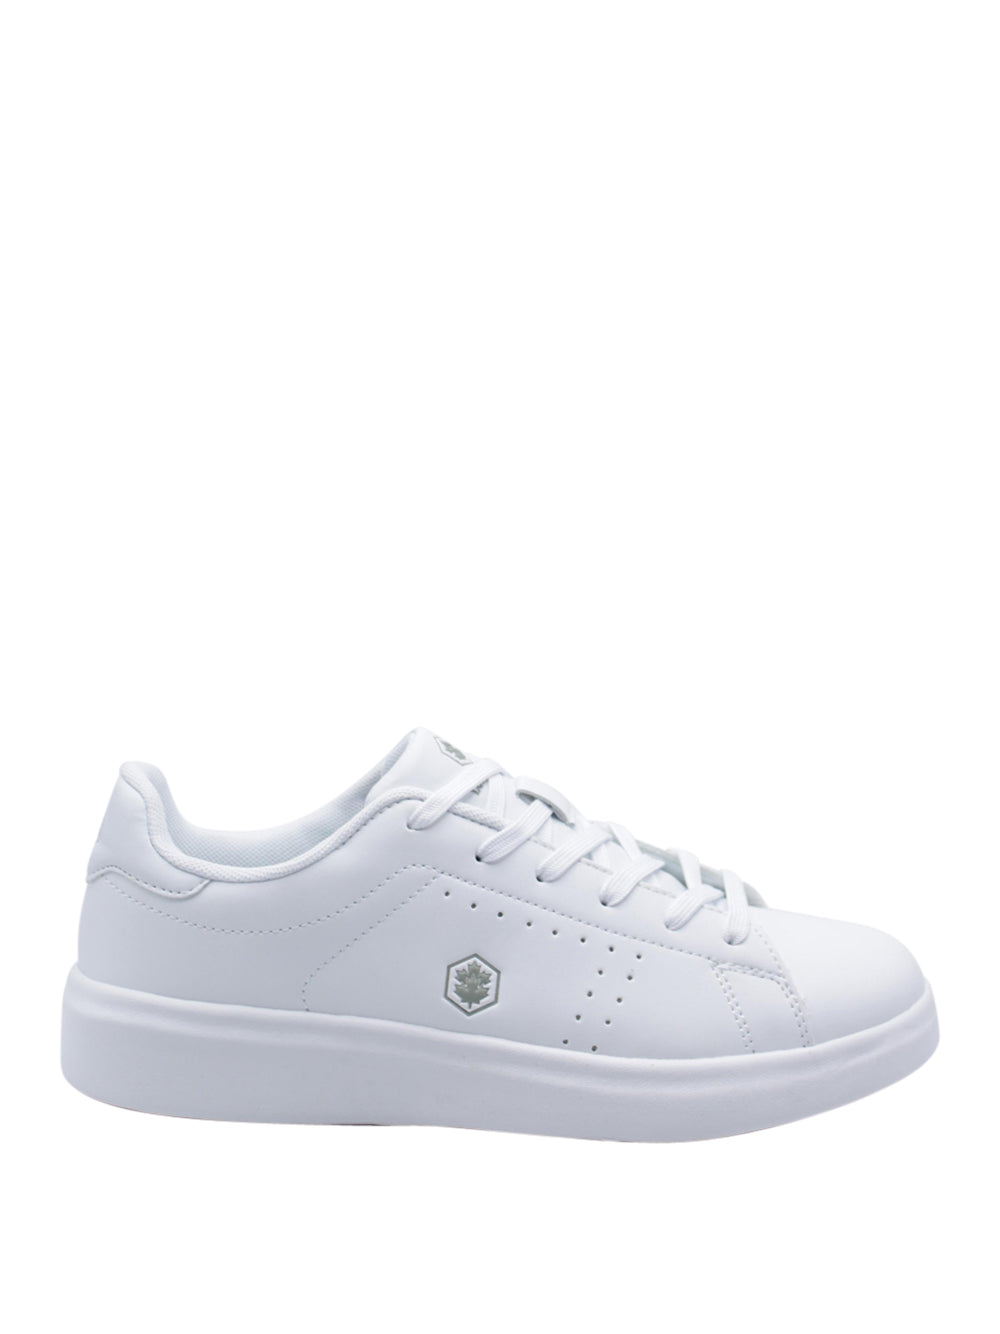 LUMBERJACK Sneakers Donna - Bianco modello SW71411-002